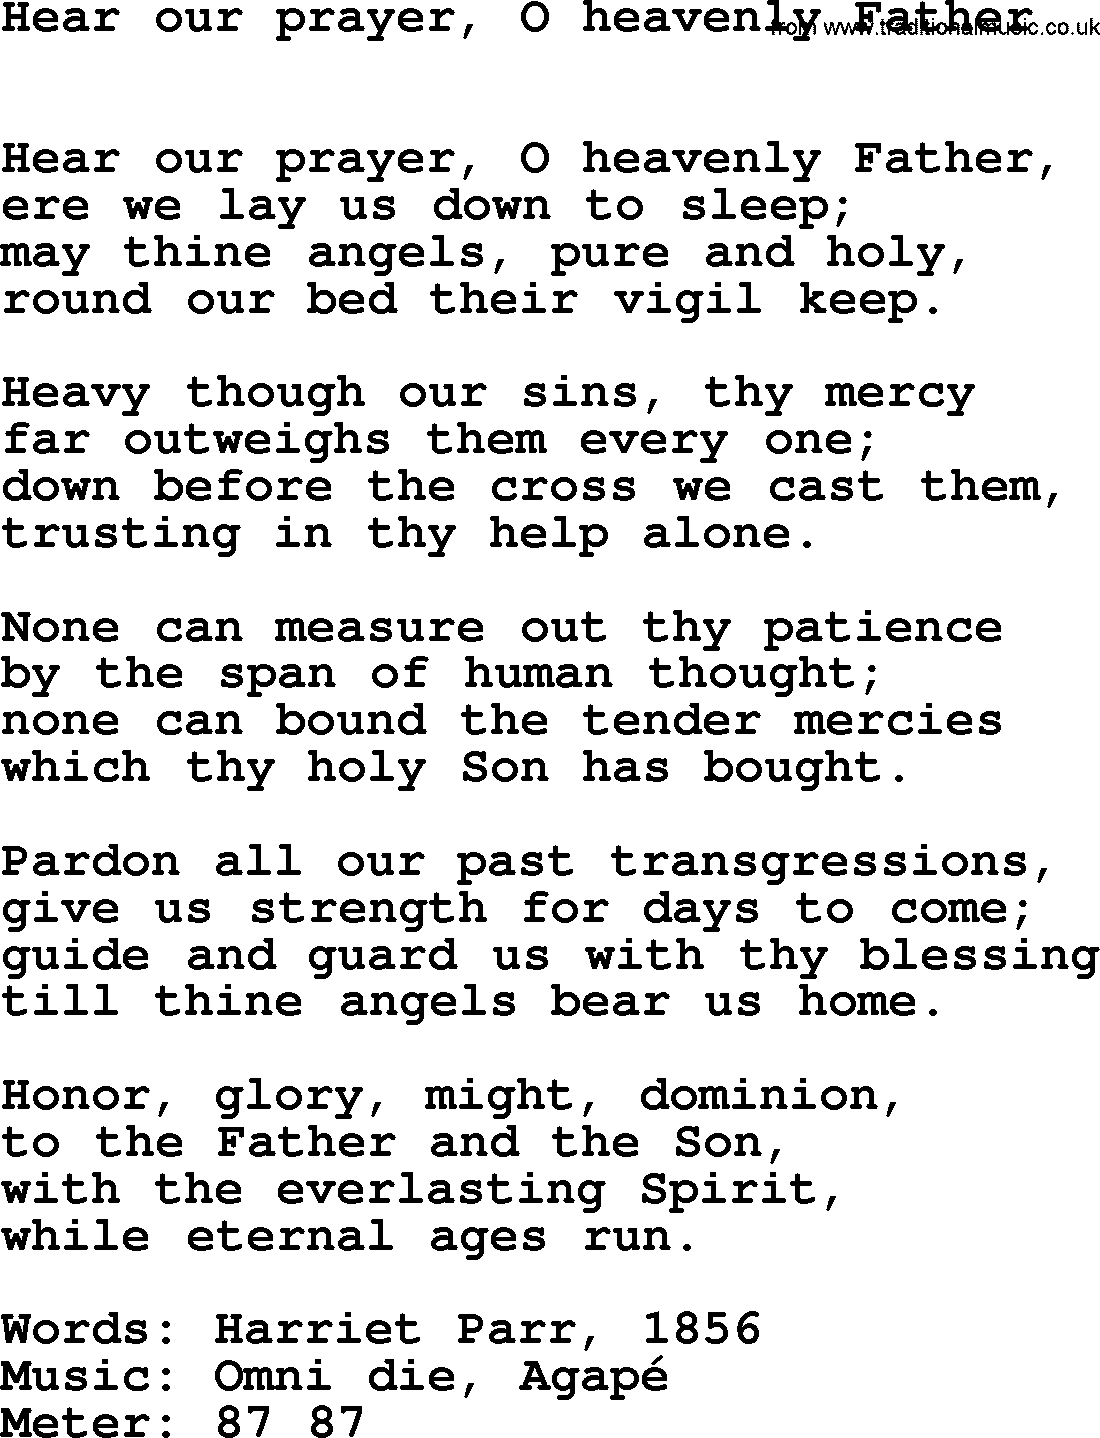 Book of Common Praise Hymn: Hear Our Prayer, O Heavenly Father.txt lyrics with midi music